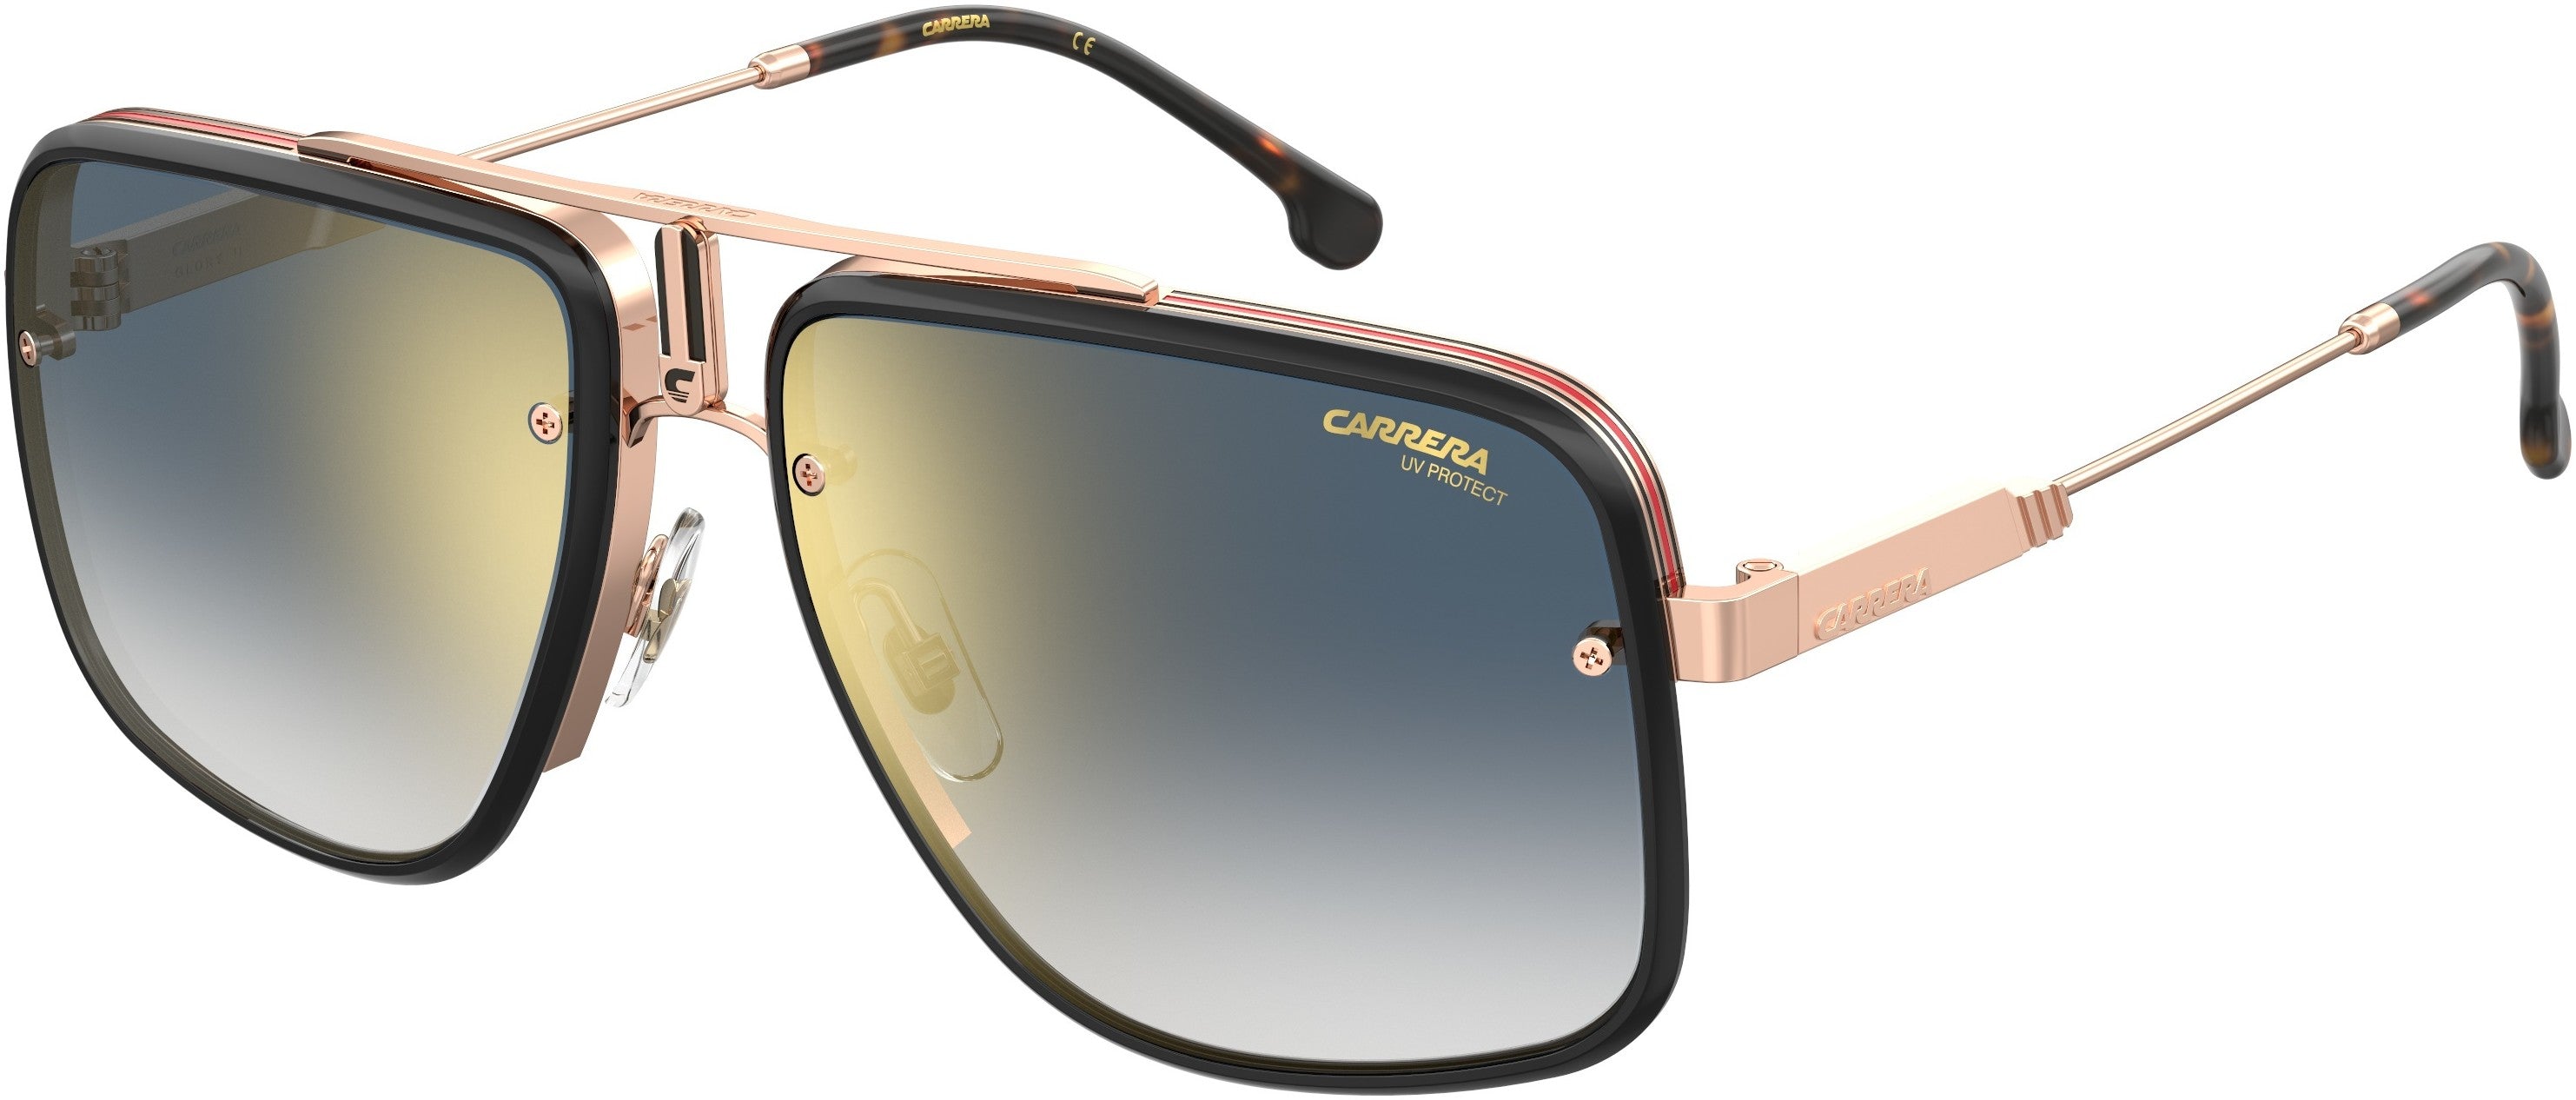  Carrera Glory Ii Rectangular Sunglasses 0DDB-0DDB  Gold Copper (1V Blsf Gdsp)